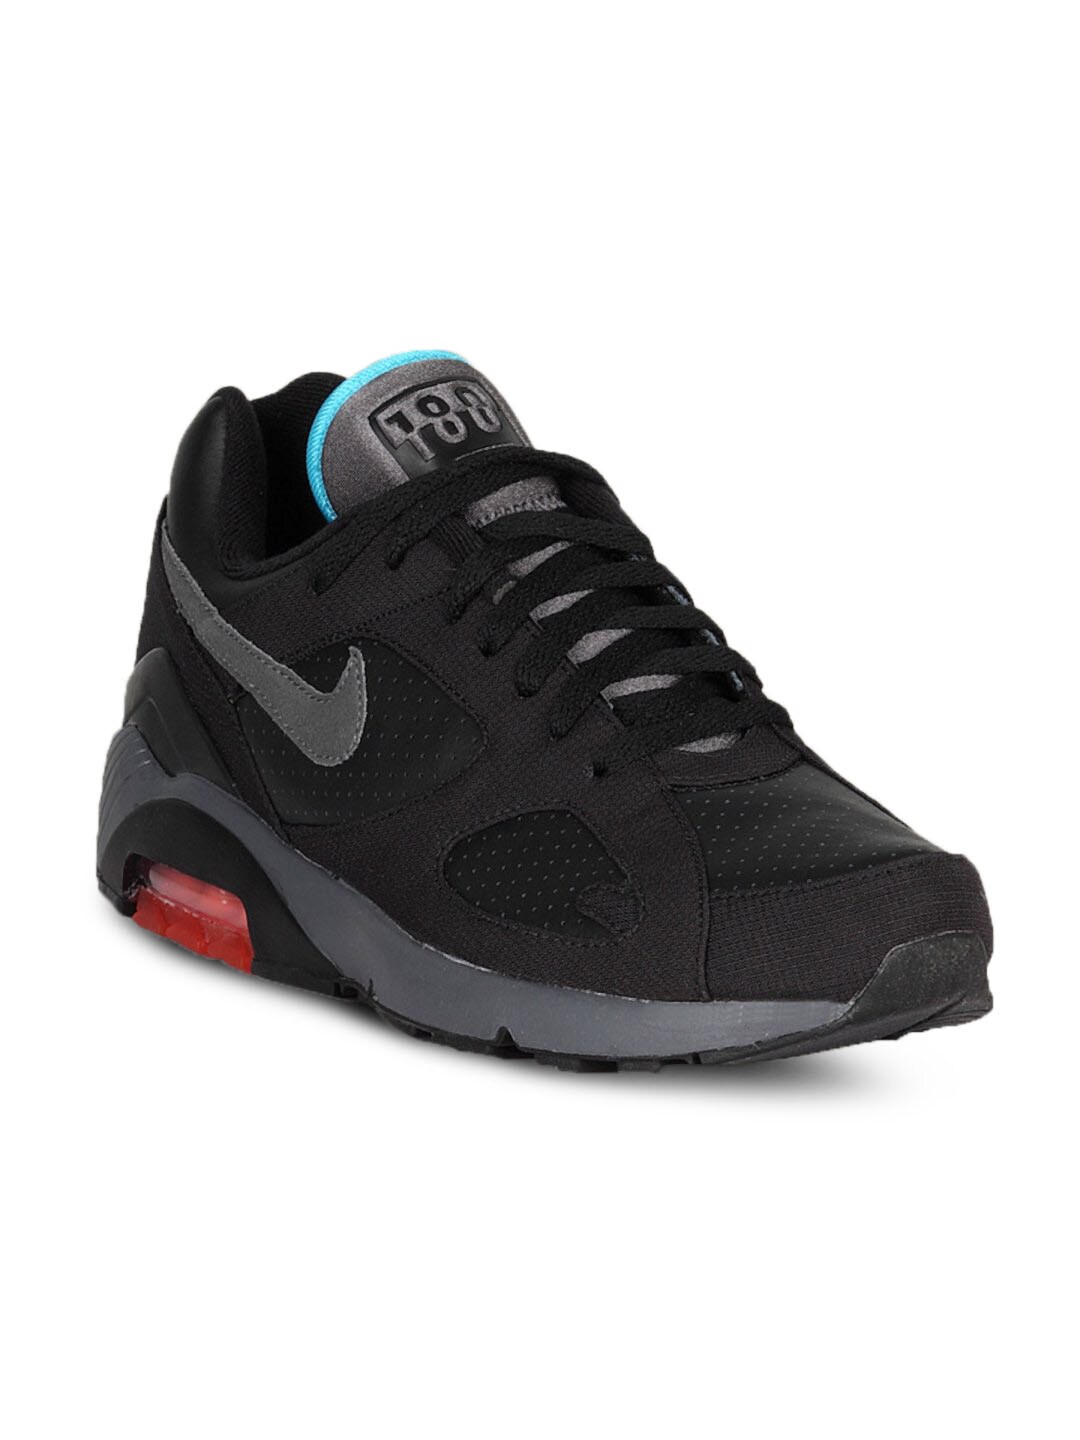 Nike Men's Air 180 Black Grey Shoe